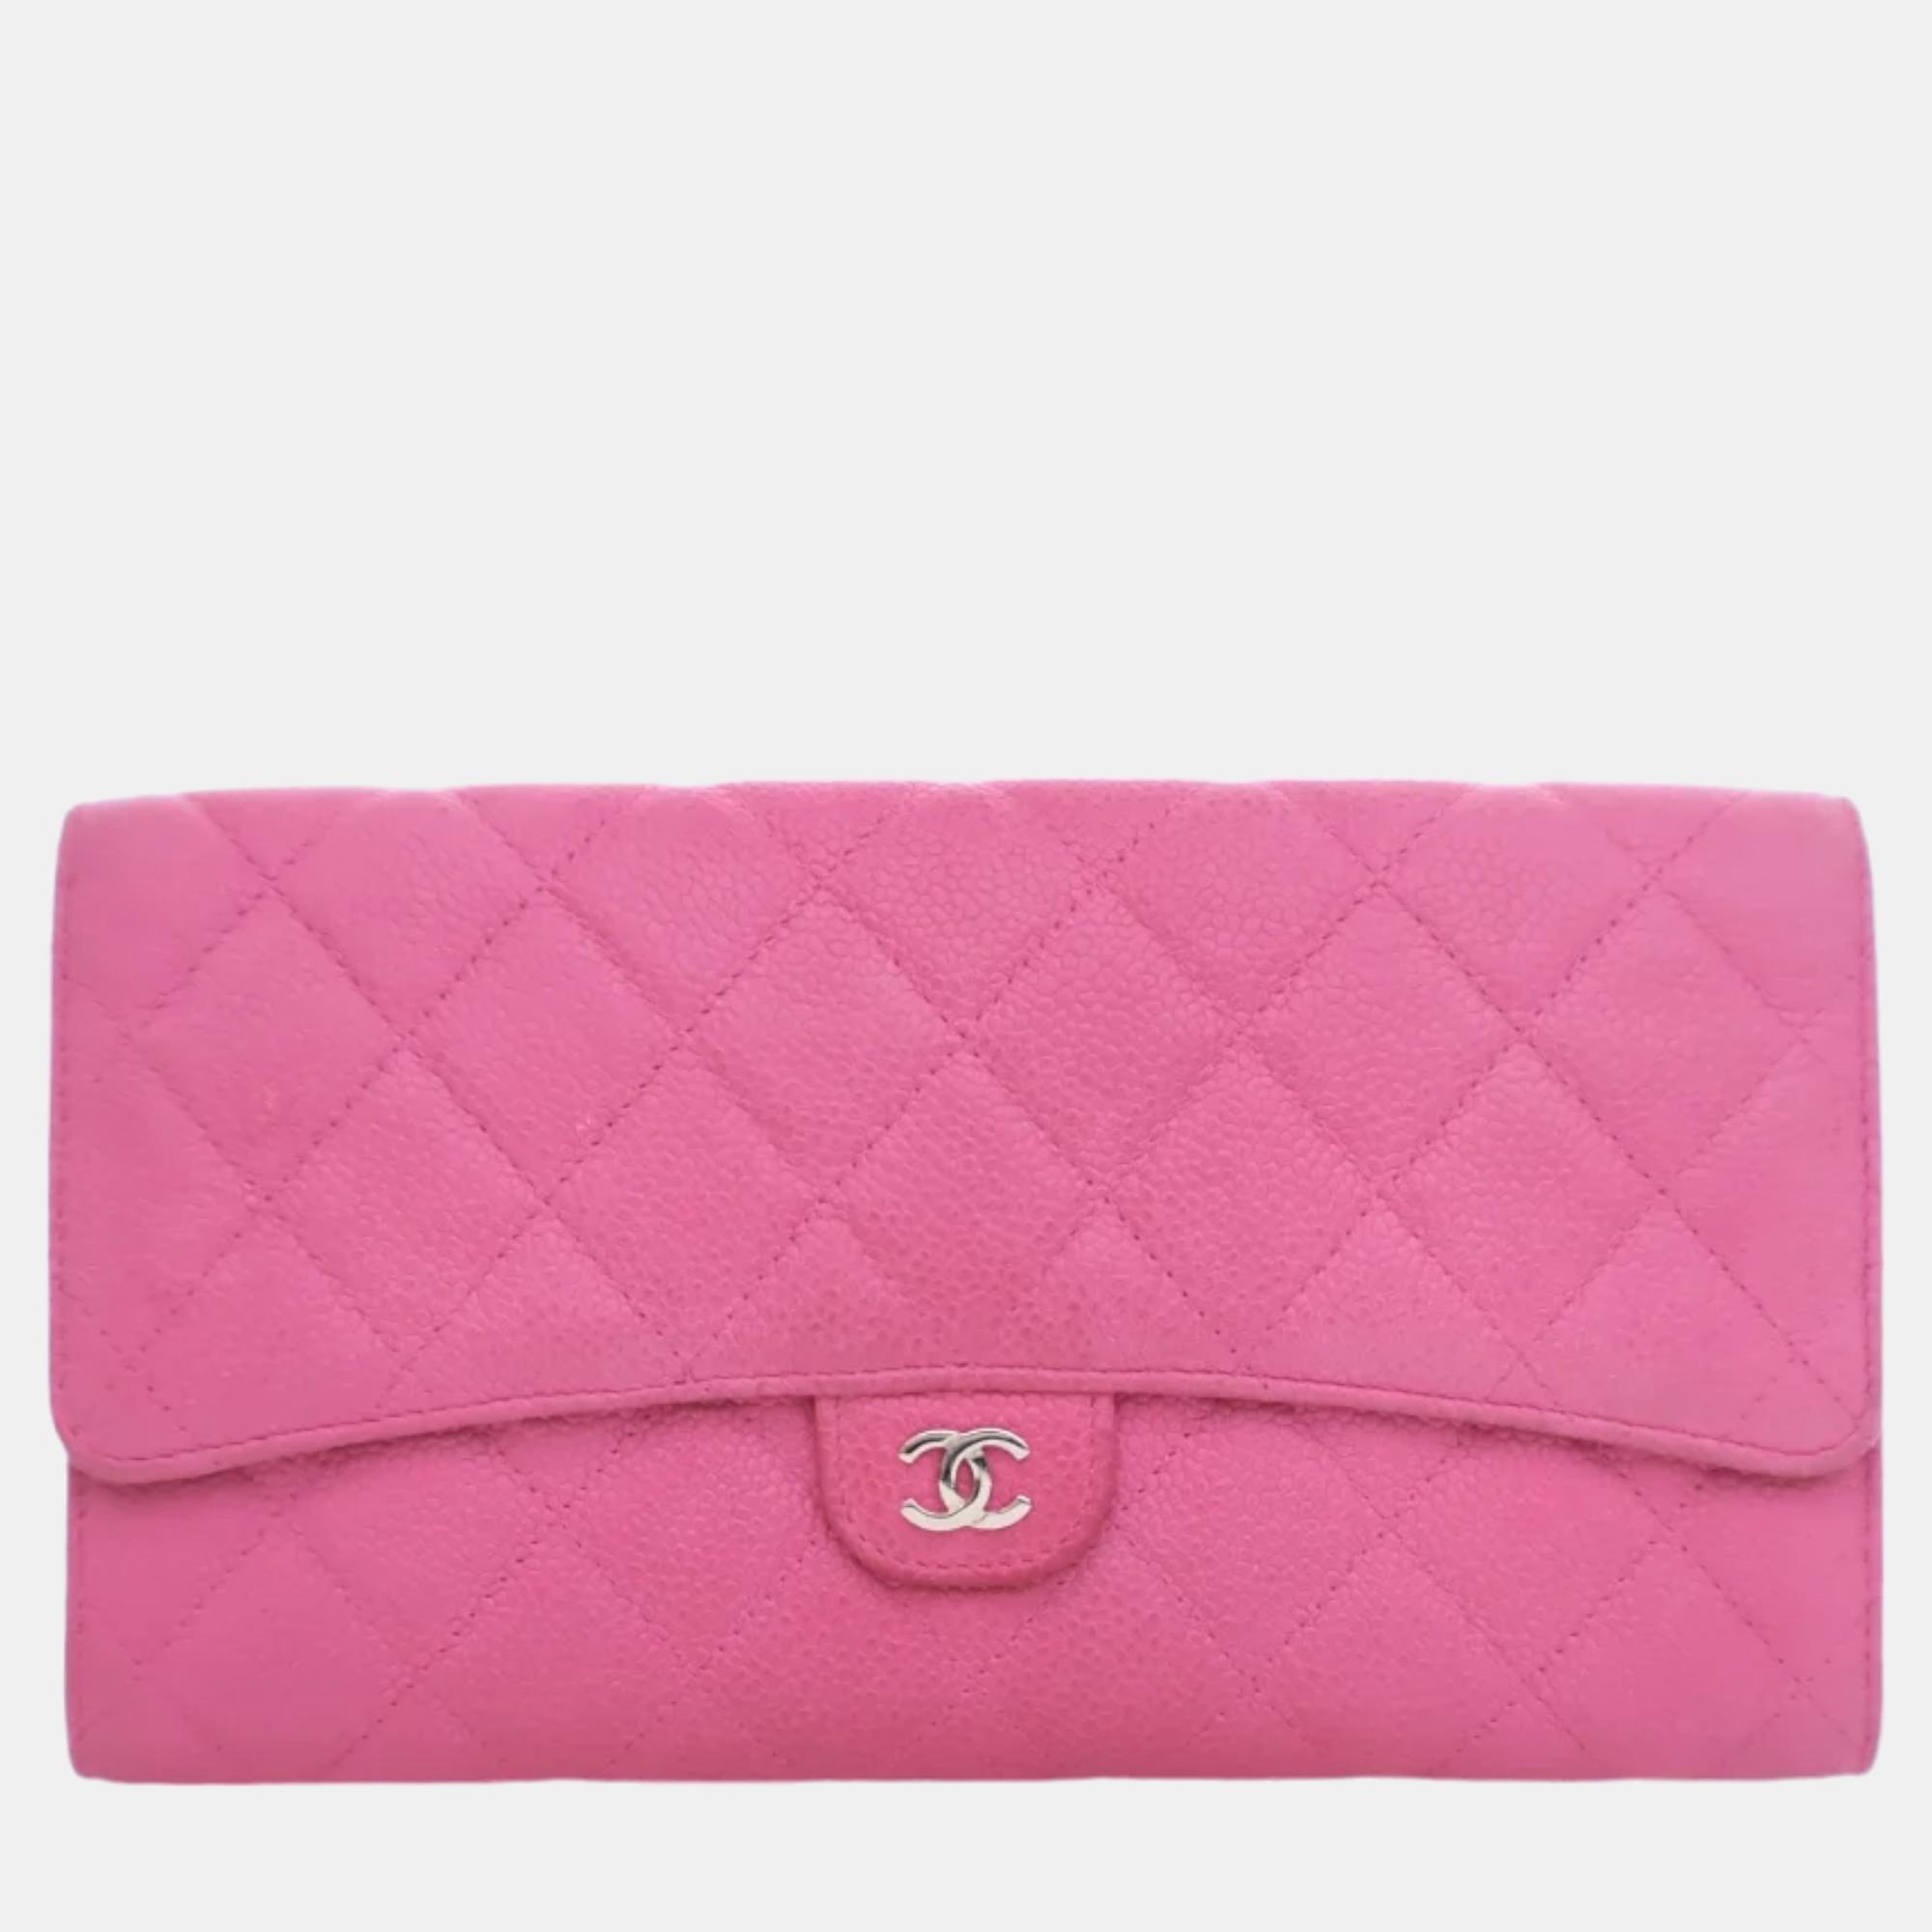 Chanel pink caviar leather interlocking cc logo continental wallet